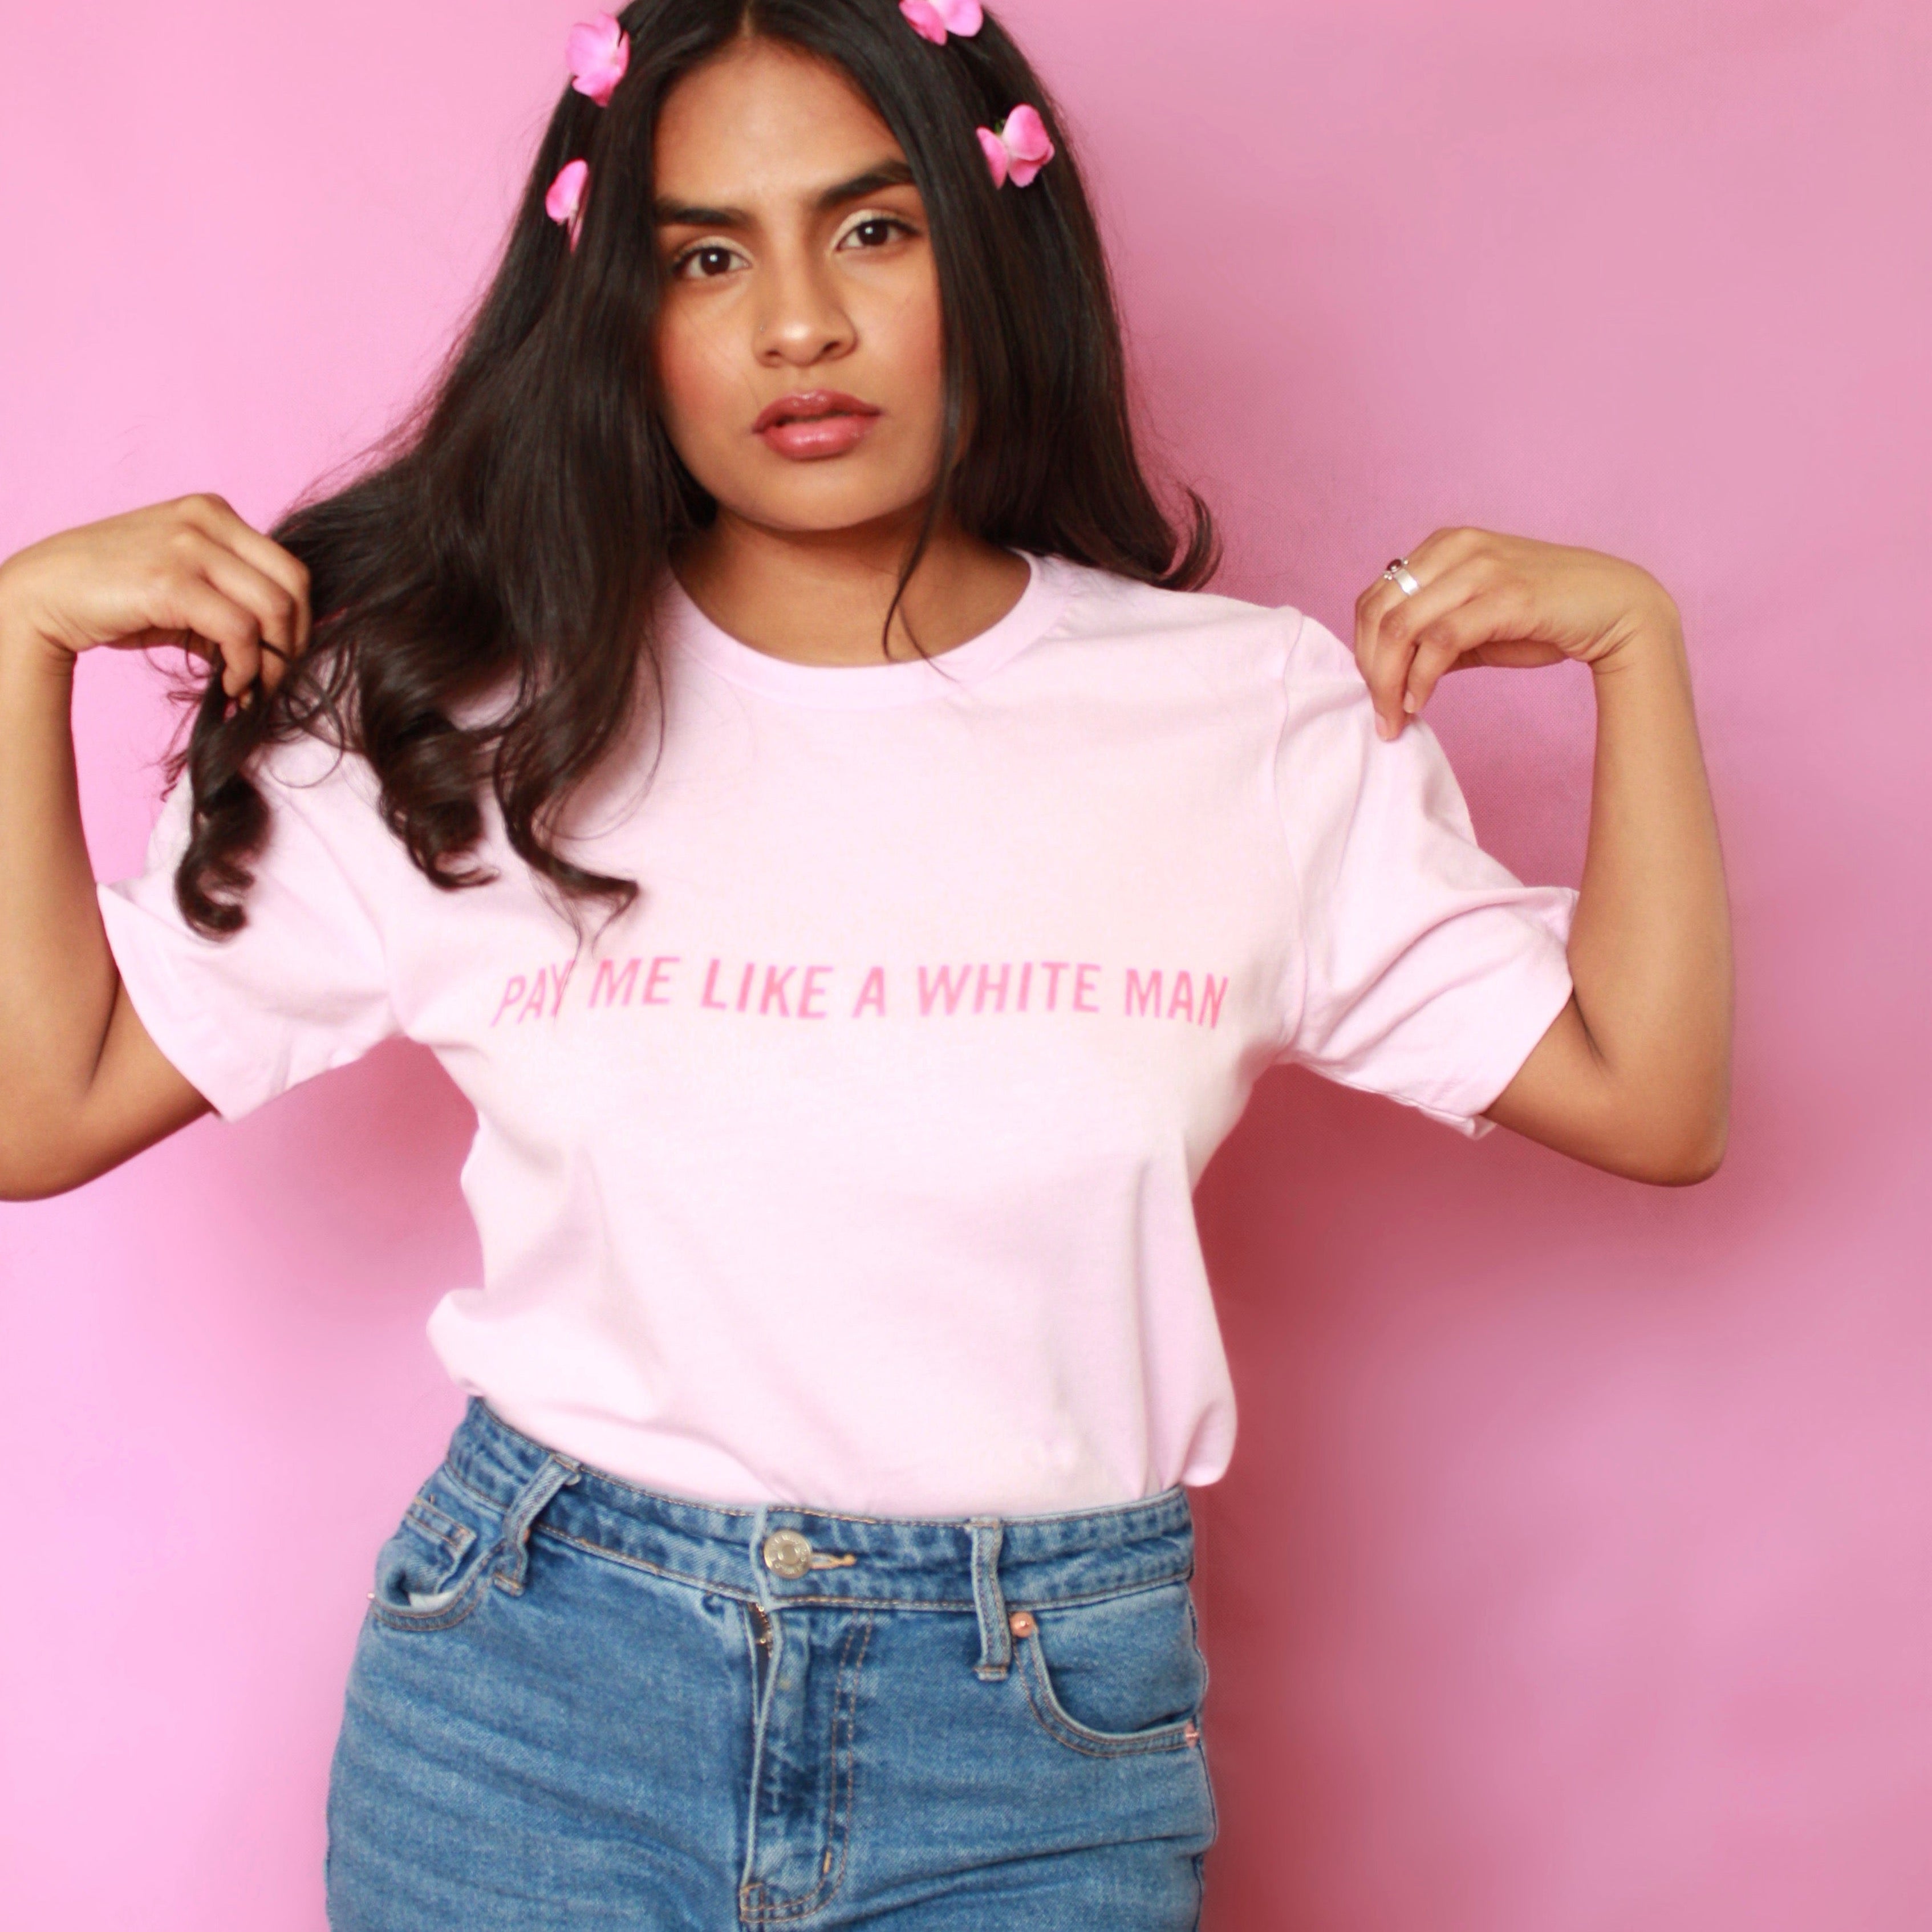 Pay Me Like A White Man Unisex Feminist T-shirt - Shop Feminist Apparel -Shop Women’s Rights T-shirts - Pink Oversized Women’s T-shirt